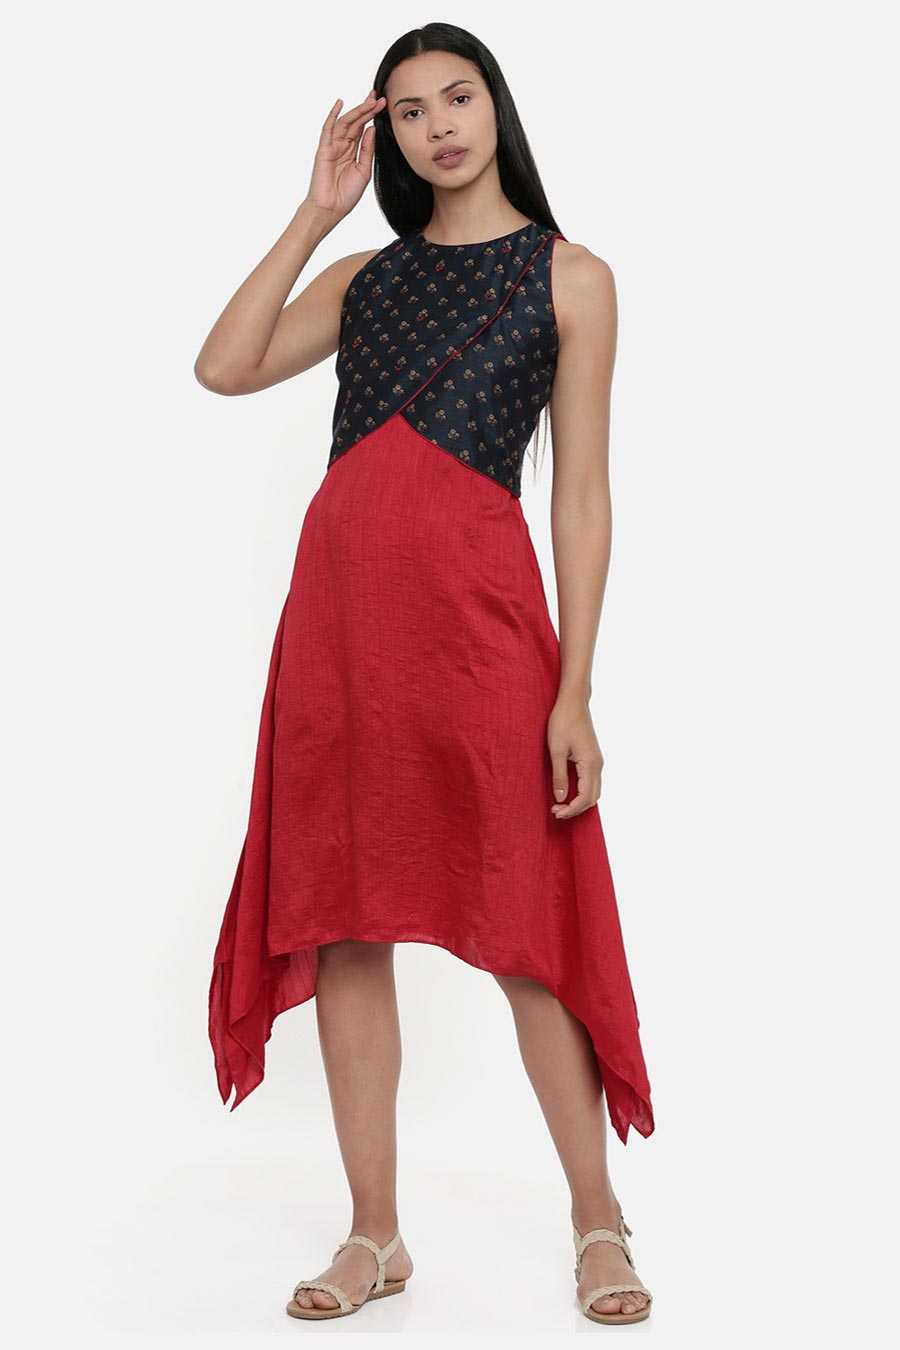 Shop Red Chanderi Asymmetric Dress by ASMI BY MAYANK MODI at House ...